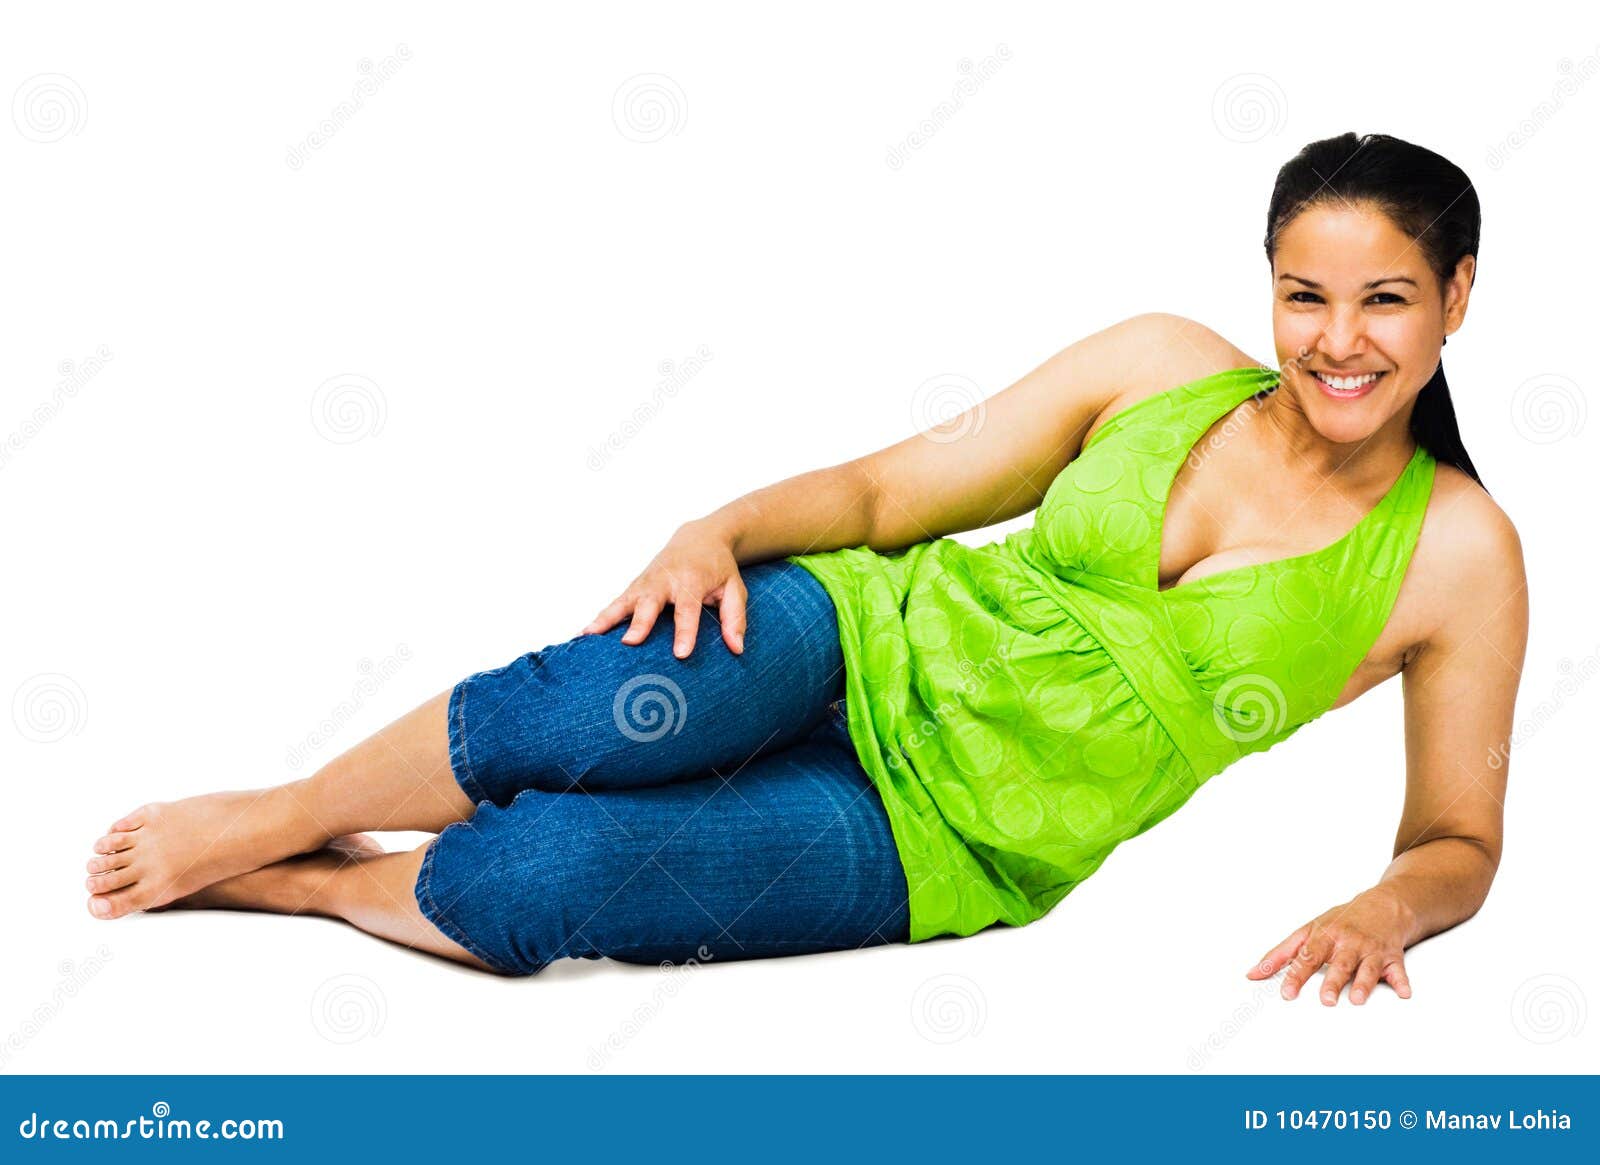 confident woman reclining